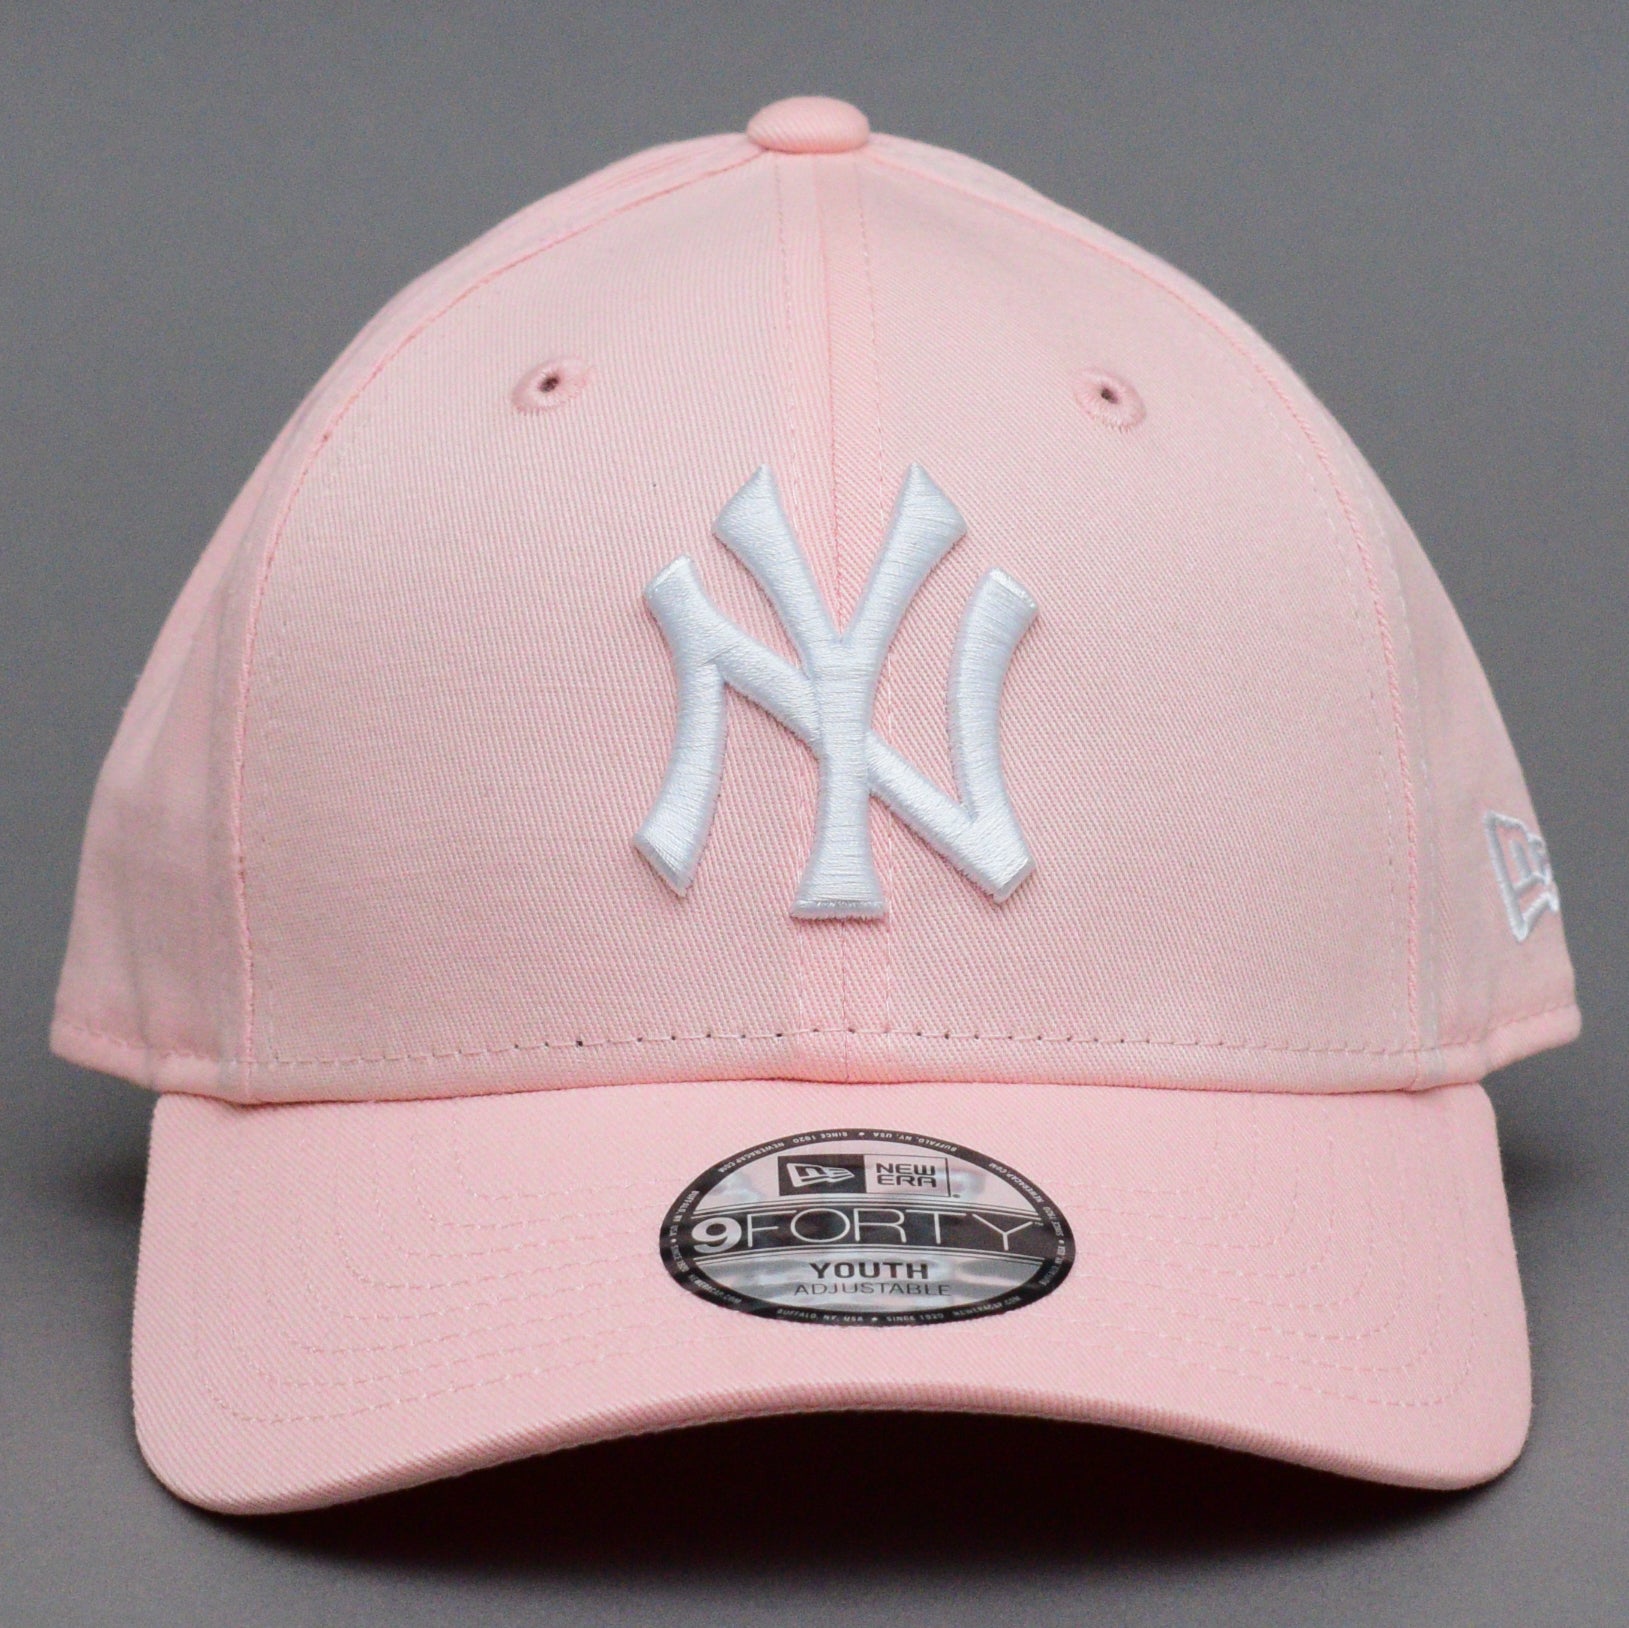 New Era - NY Yankees 9Forty Youth - Adjustable - Pink/White